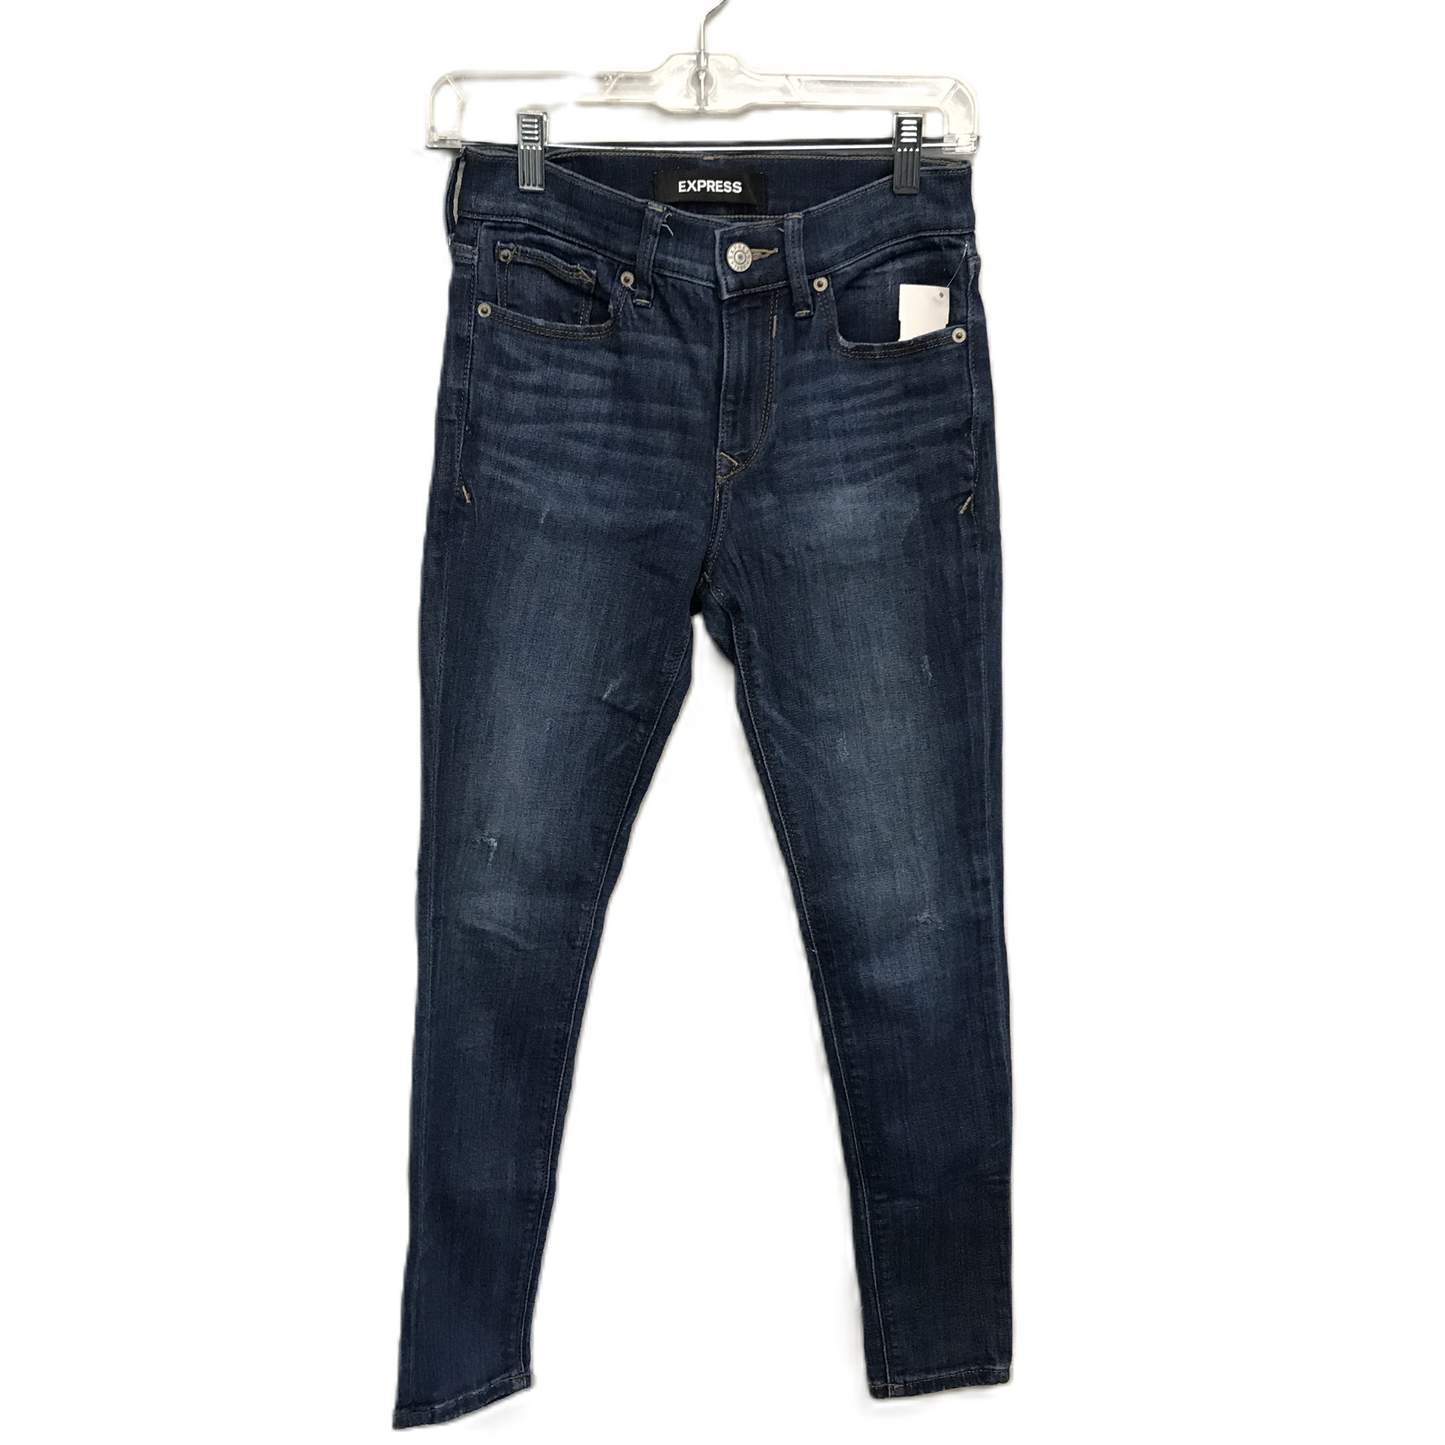 Blue Denim Jeans Skinny By Express, Size: 0